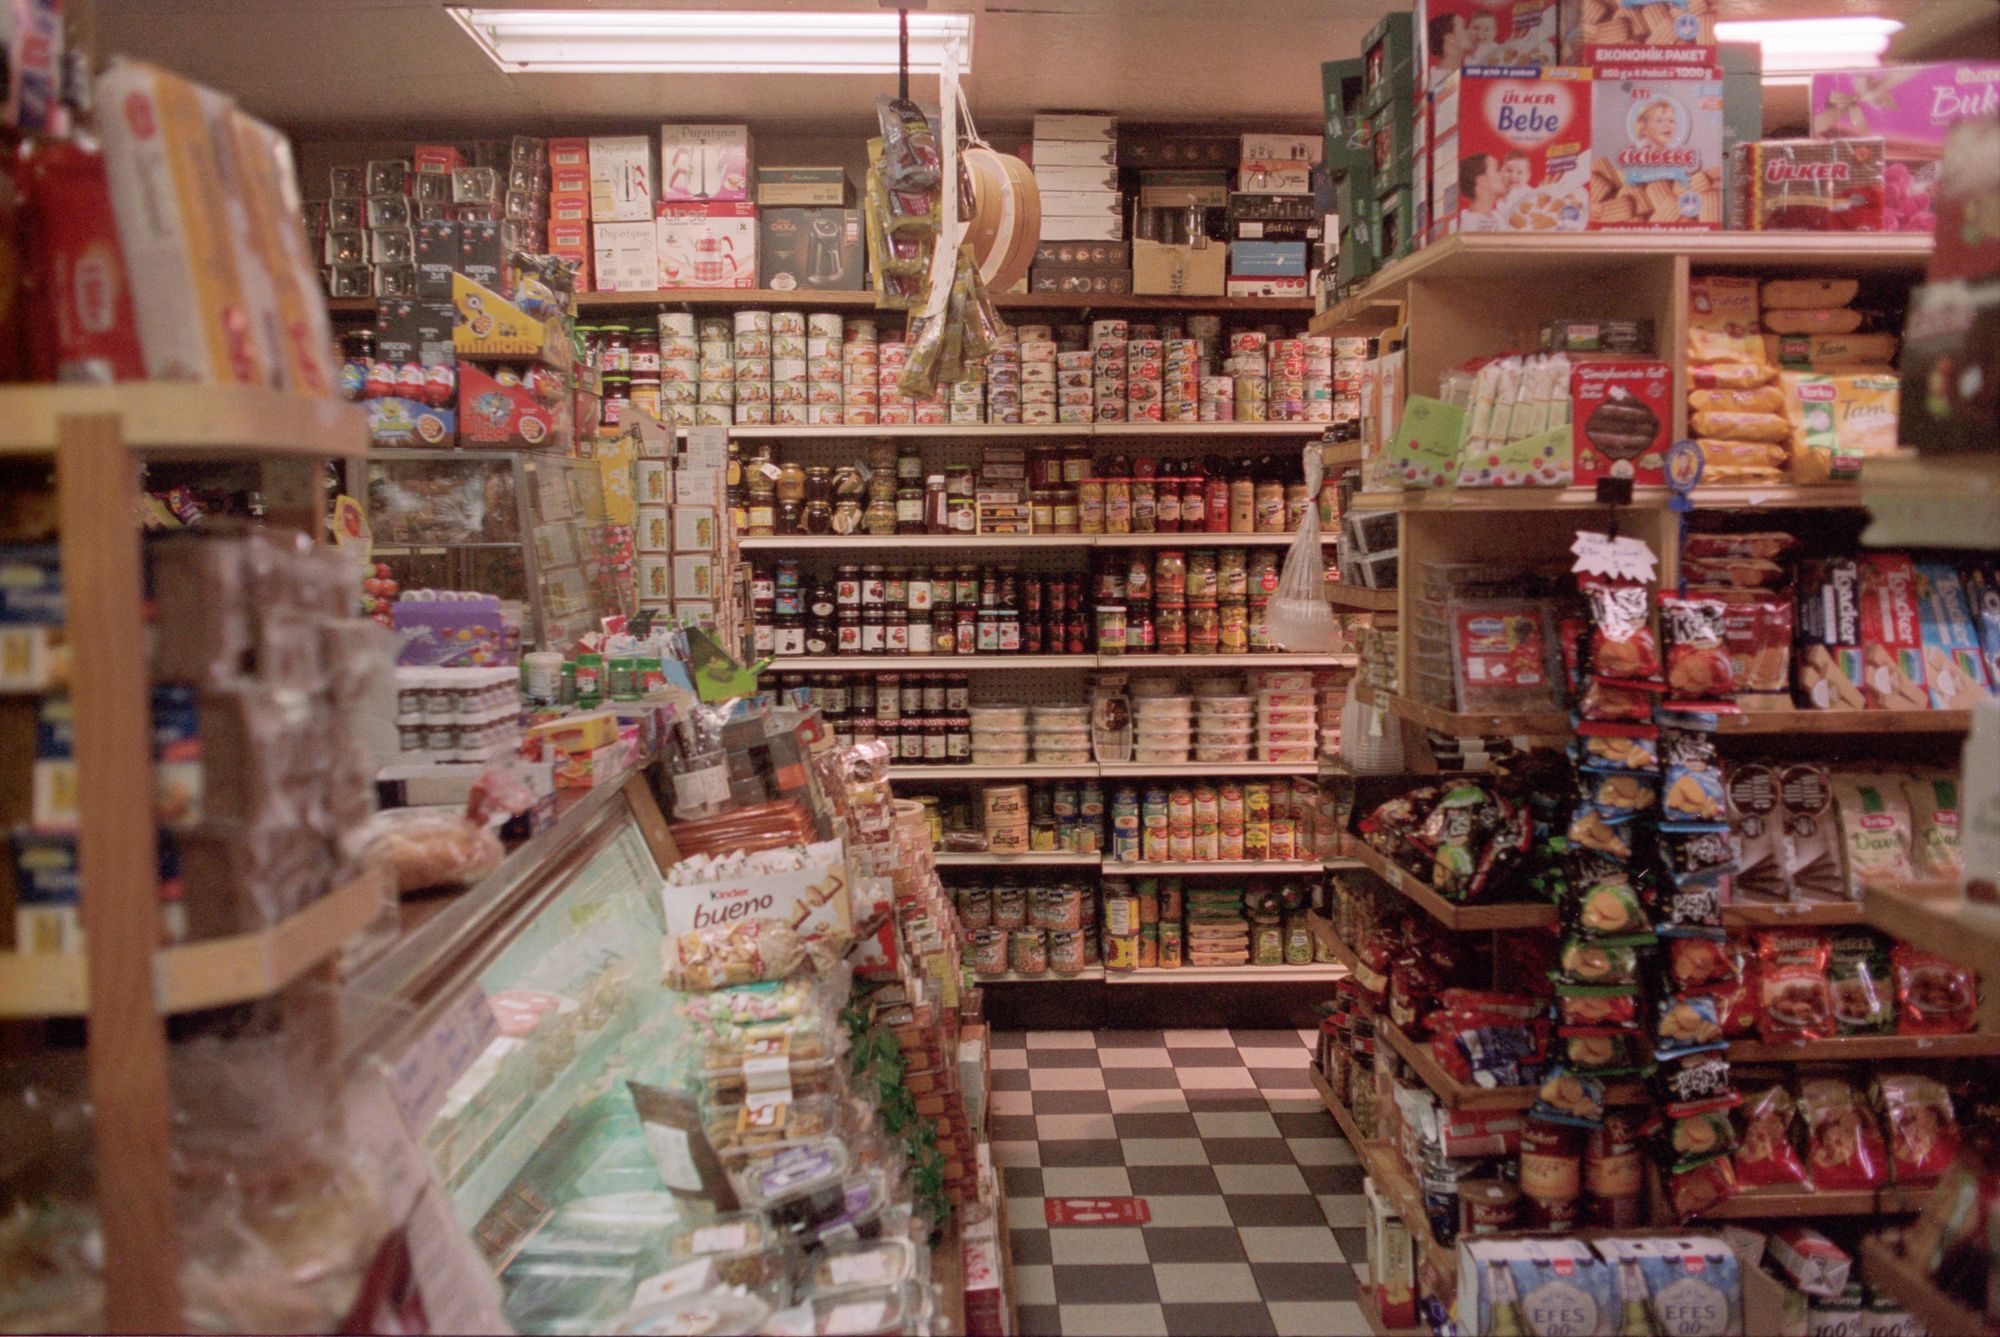 Shelves in market interior